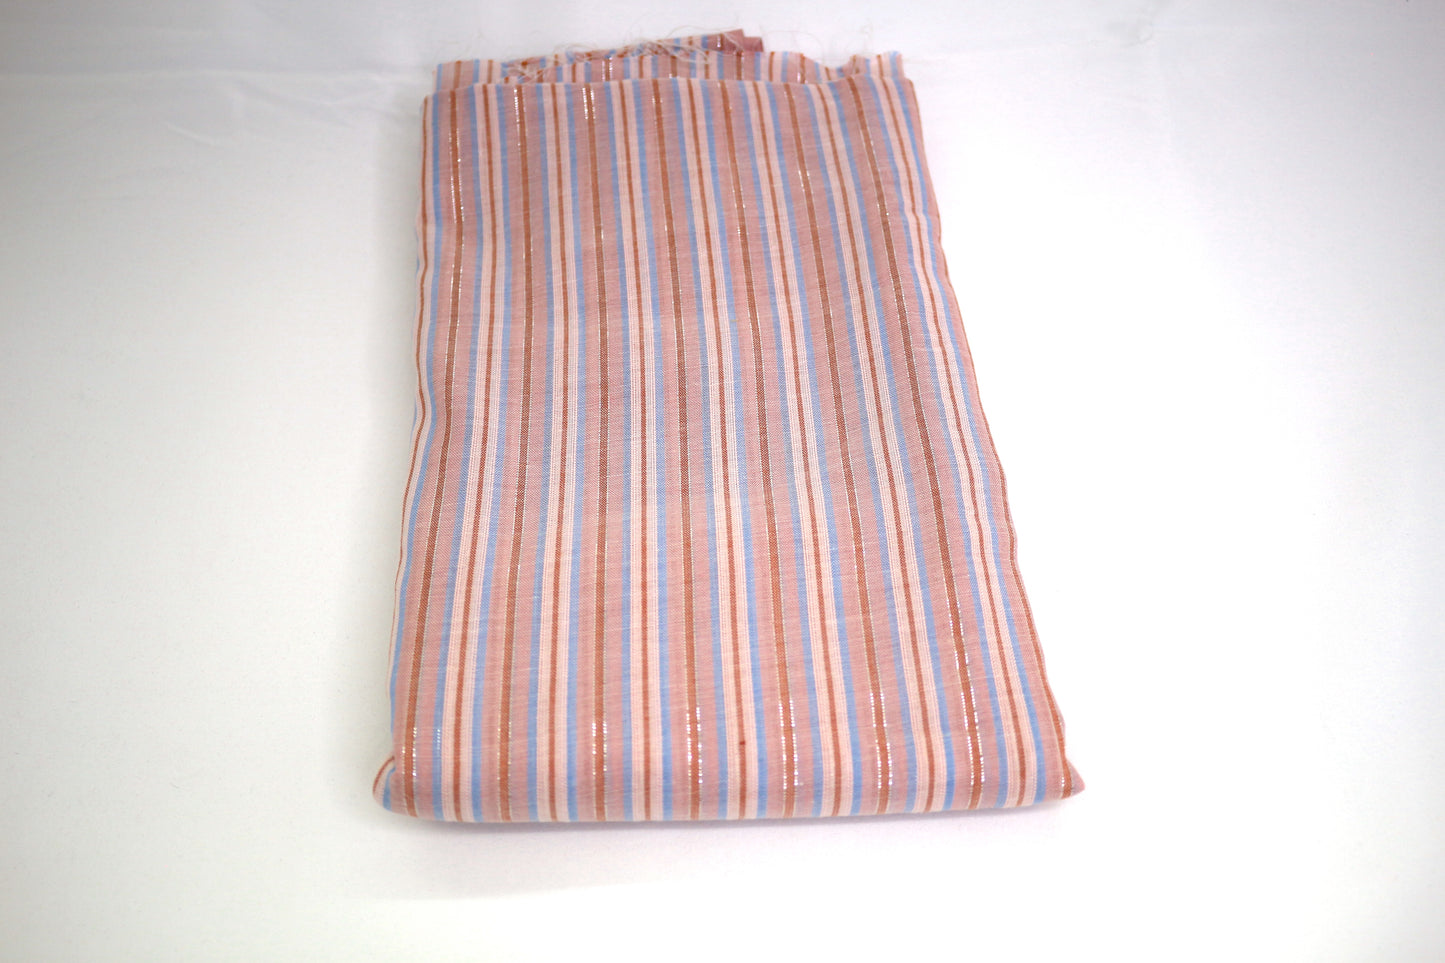 Peachy Striped Cotton Fabric 45" x 2.5 yds